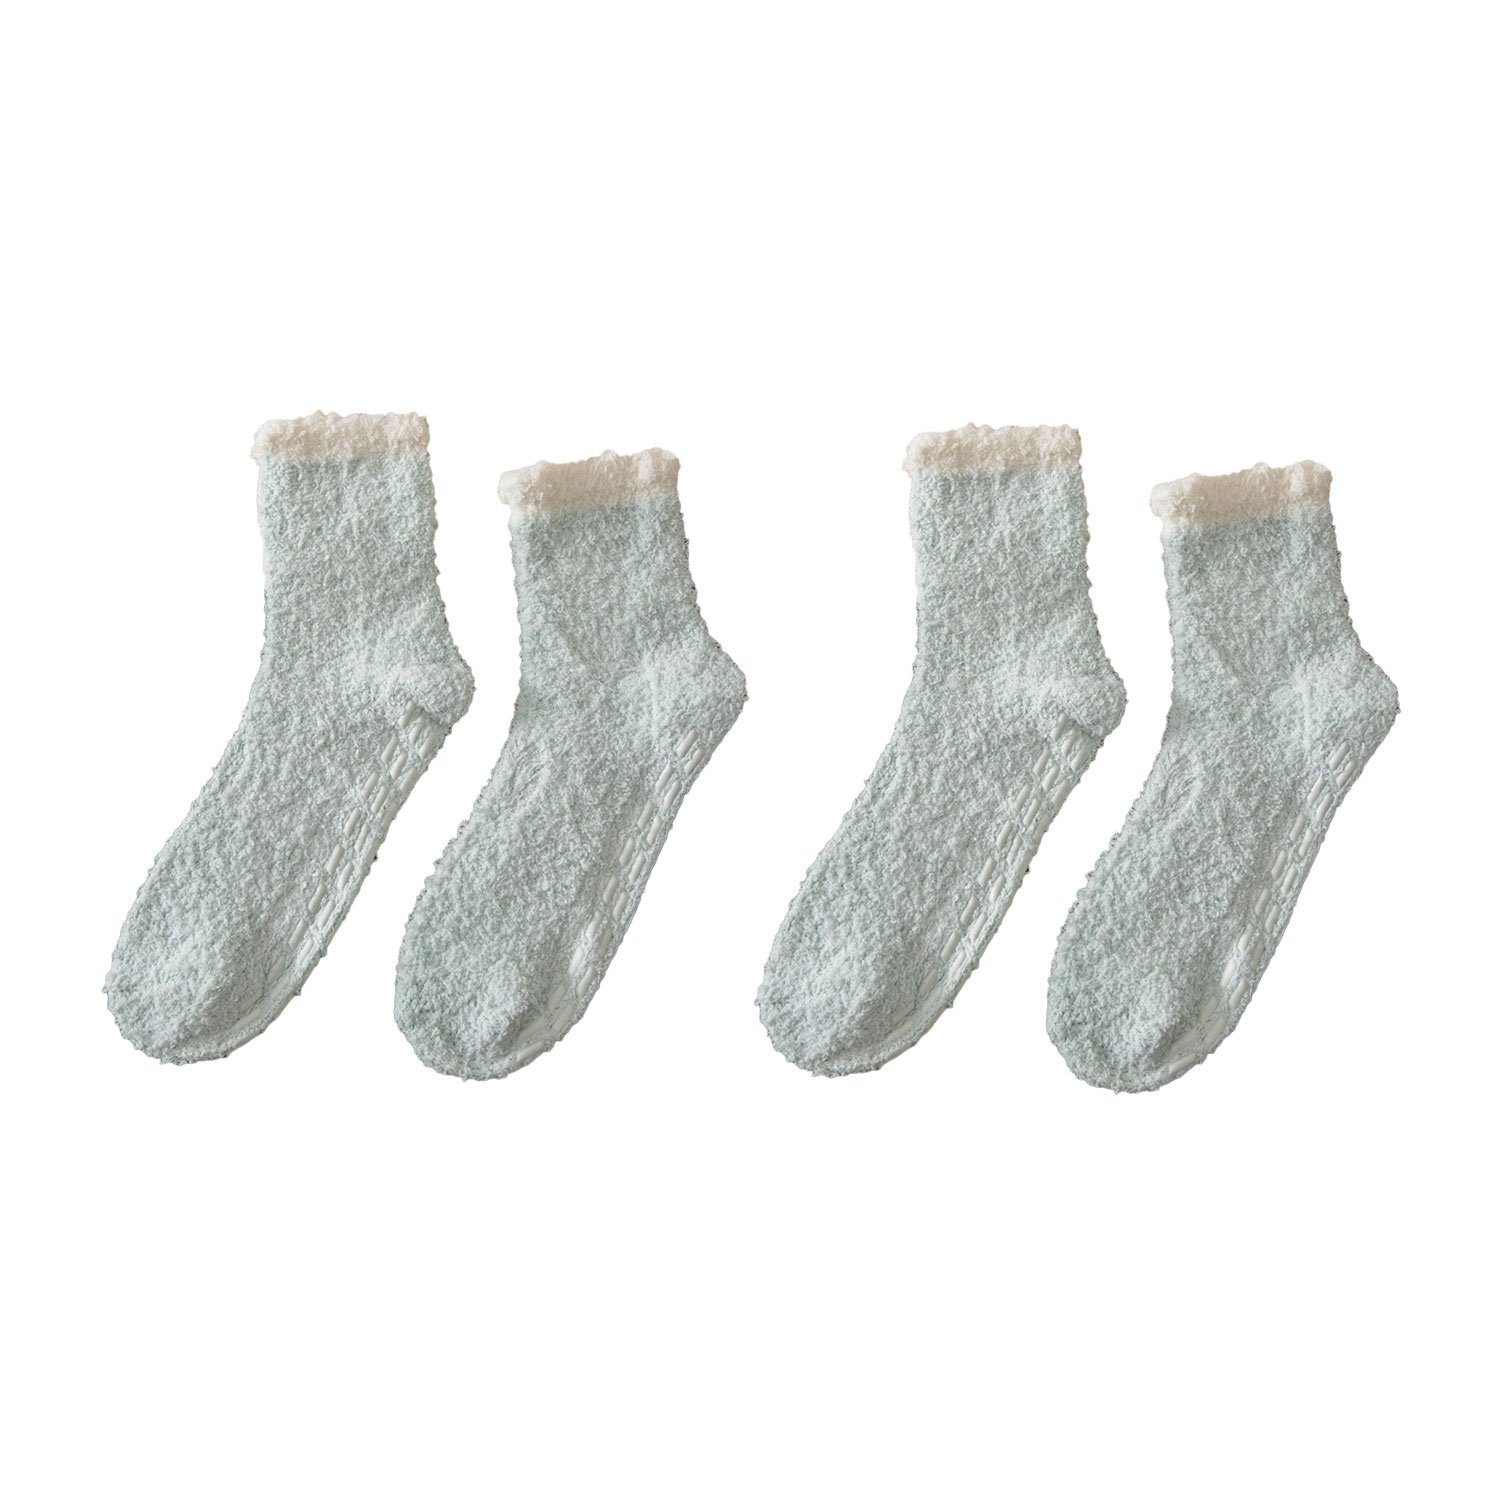 MAGICSHE Langsocken 2 Paare für Winter weiche flauschige Socken Rutschfeste und warme Fleece Socken hellgrün